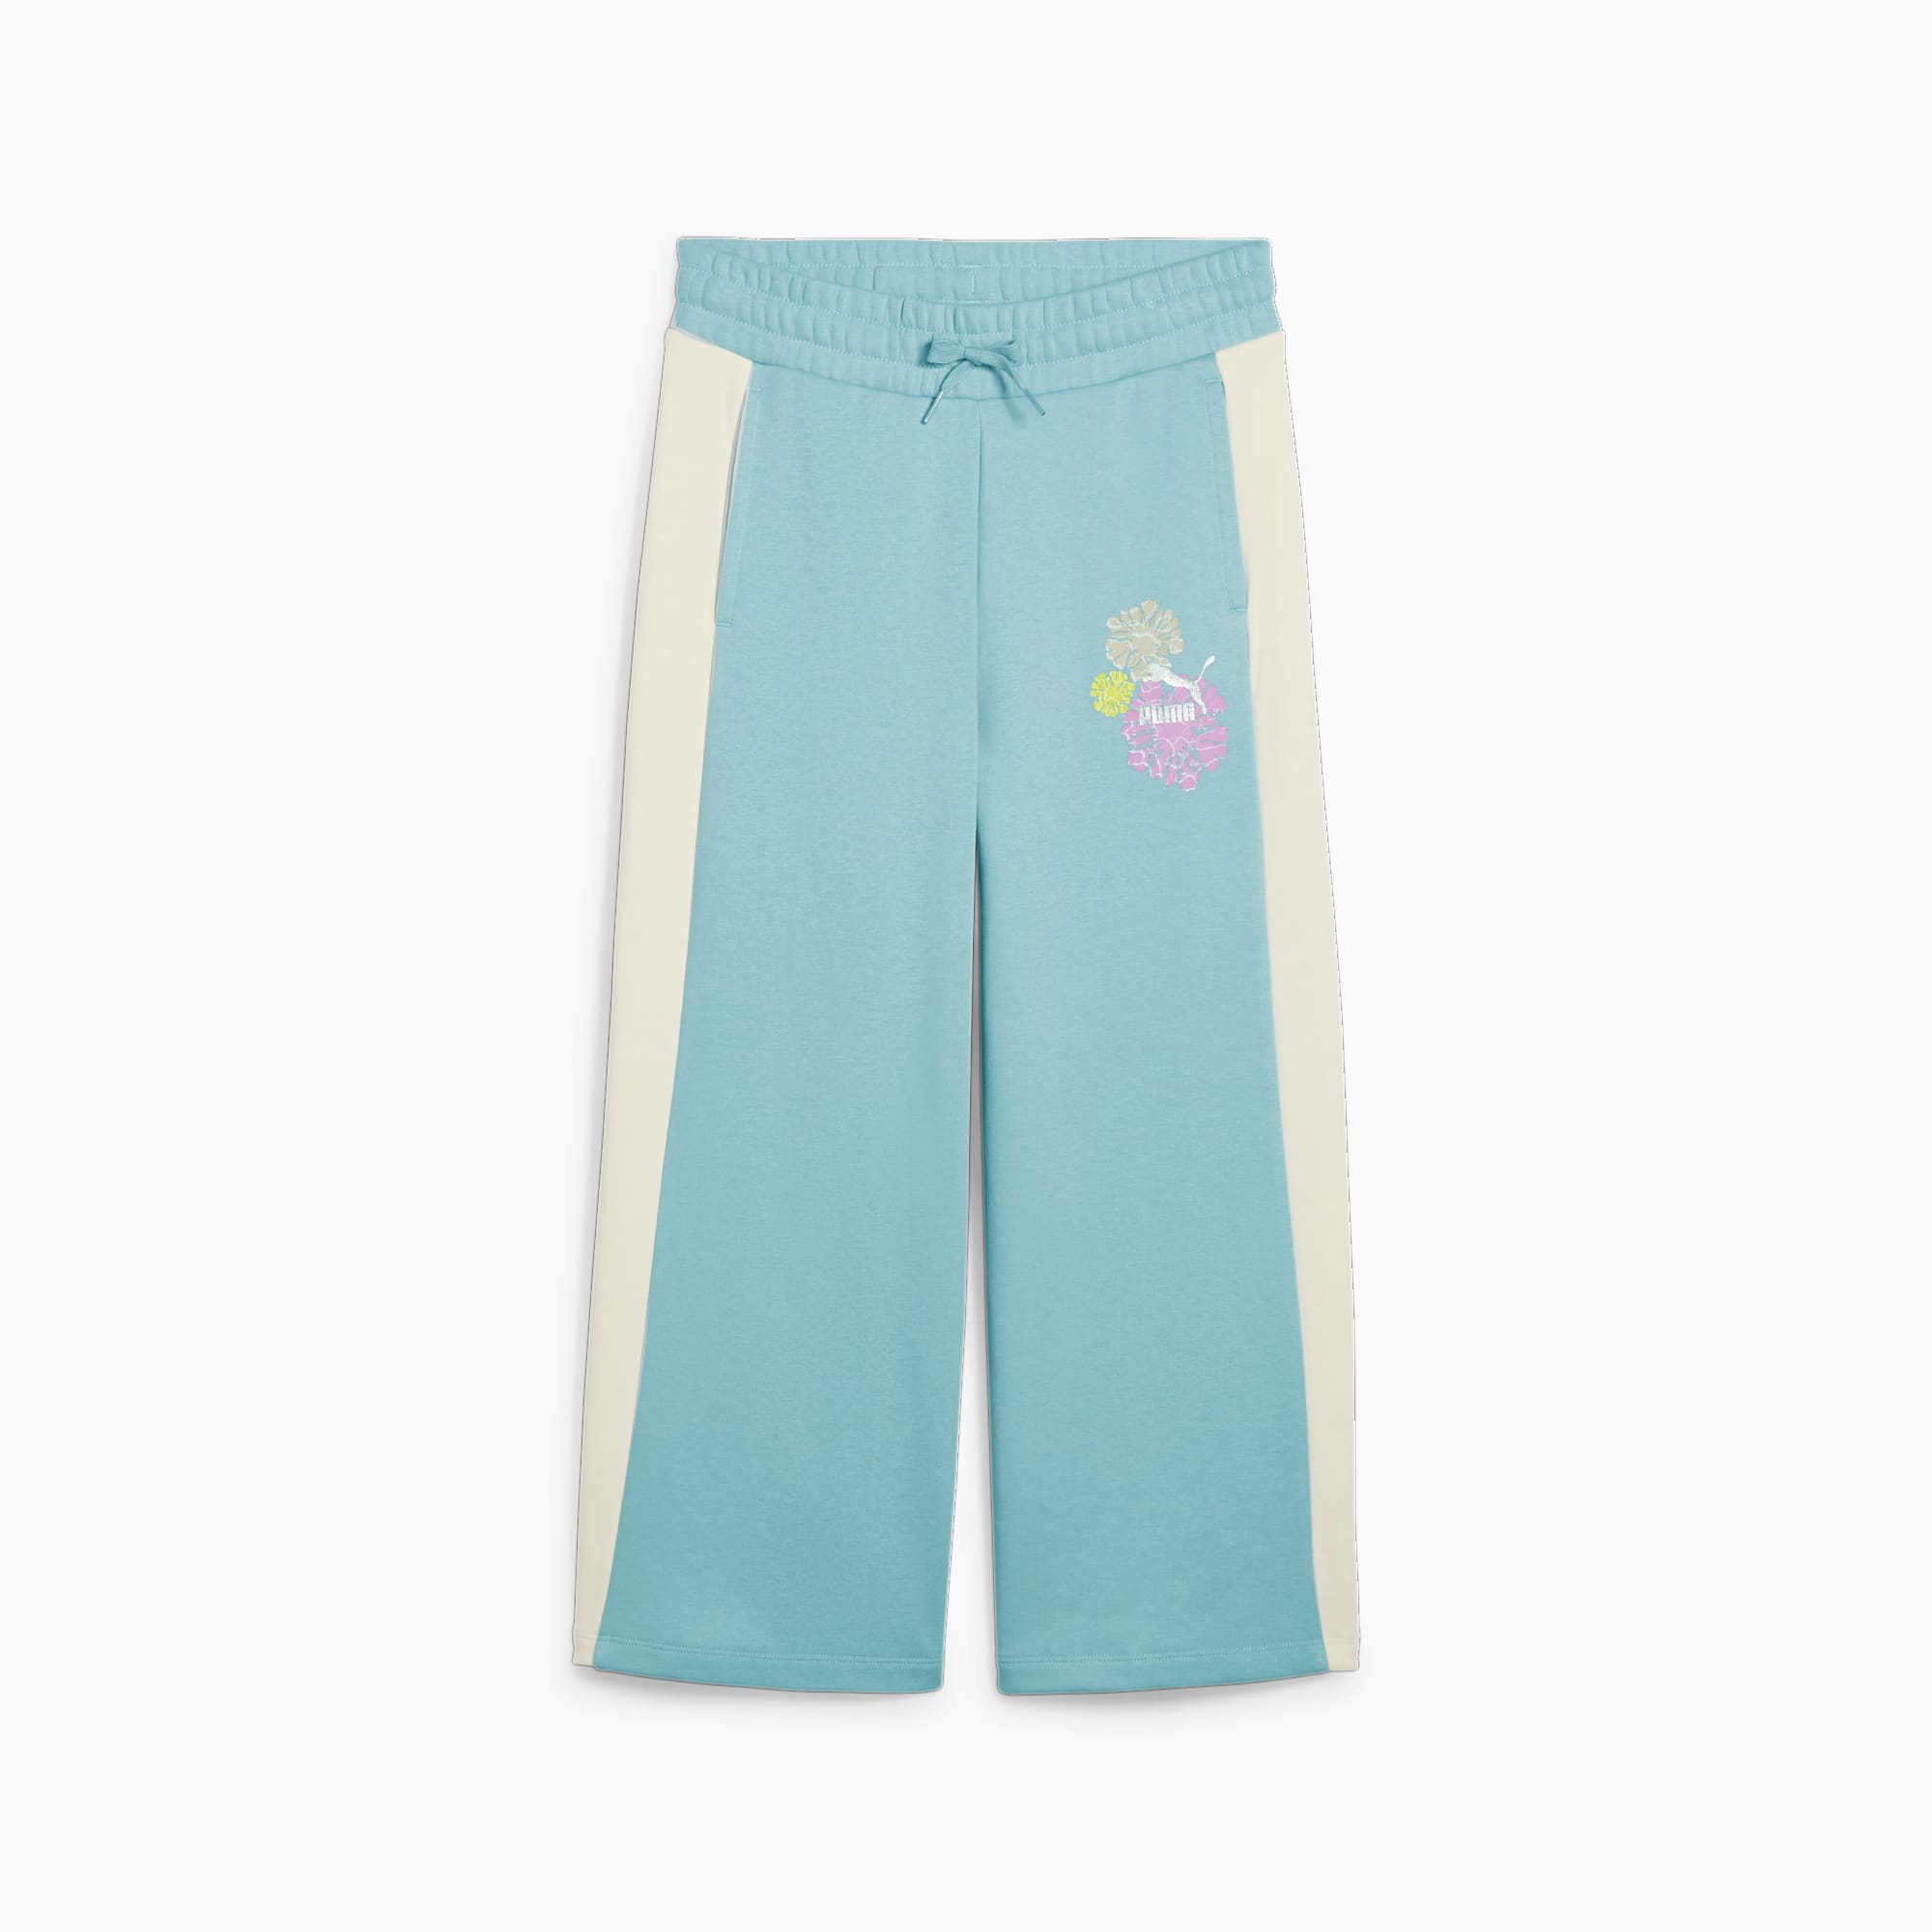 PUMA T7 Snflr Girls' 7/8 Sweatpants, Turquoise Surf, Size 128, Clothing